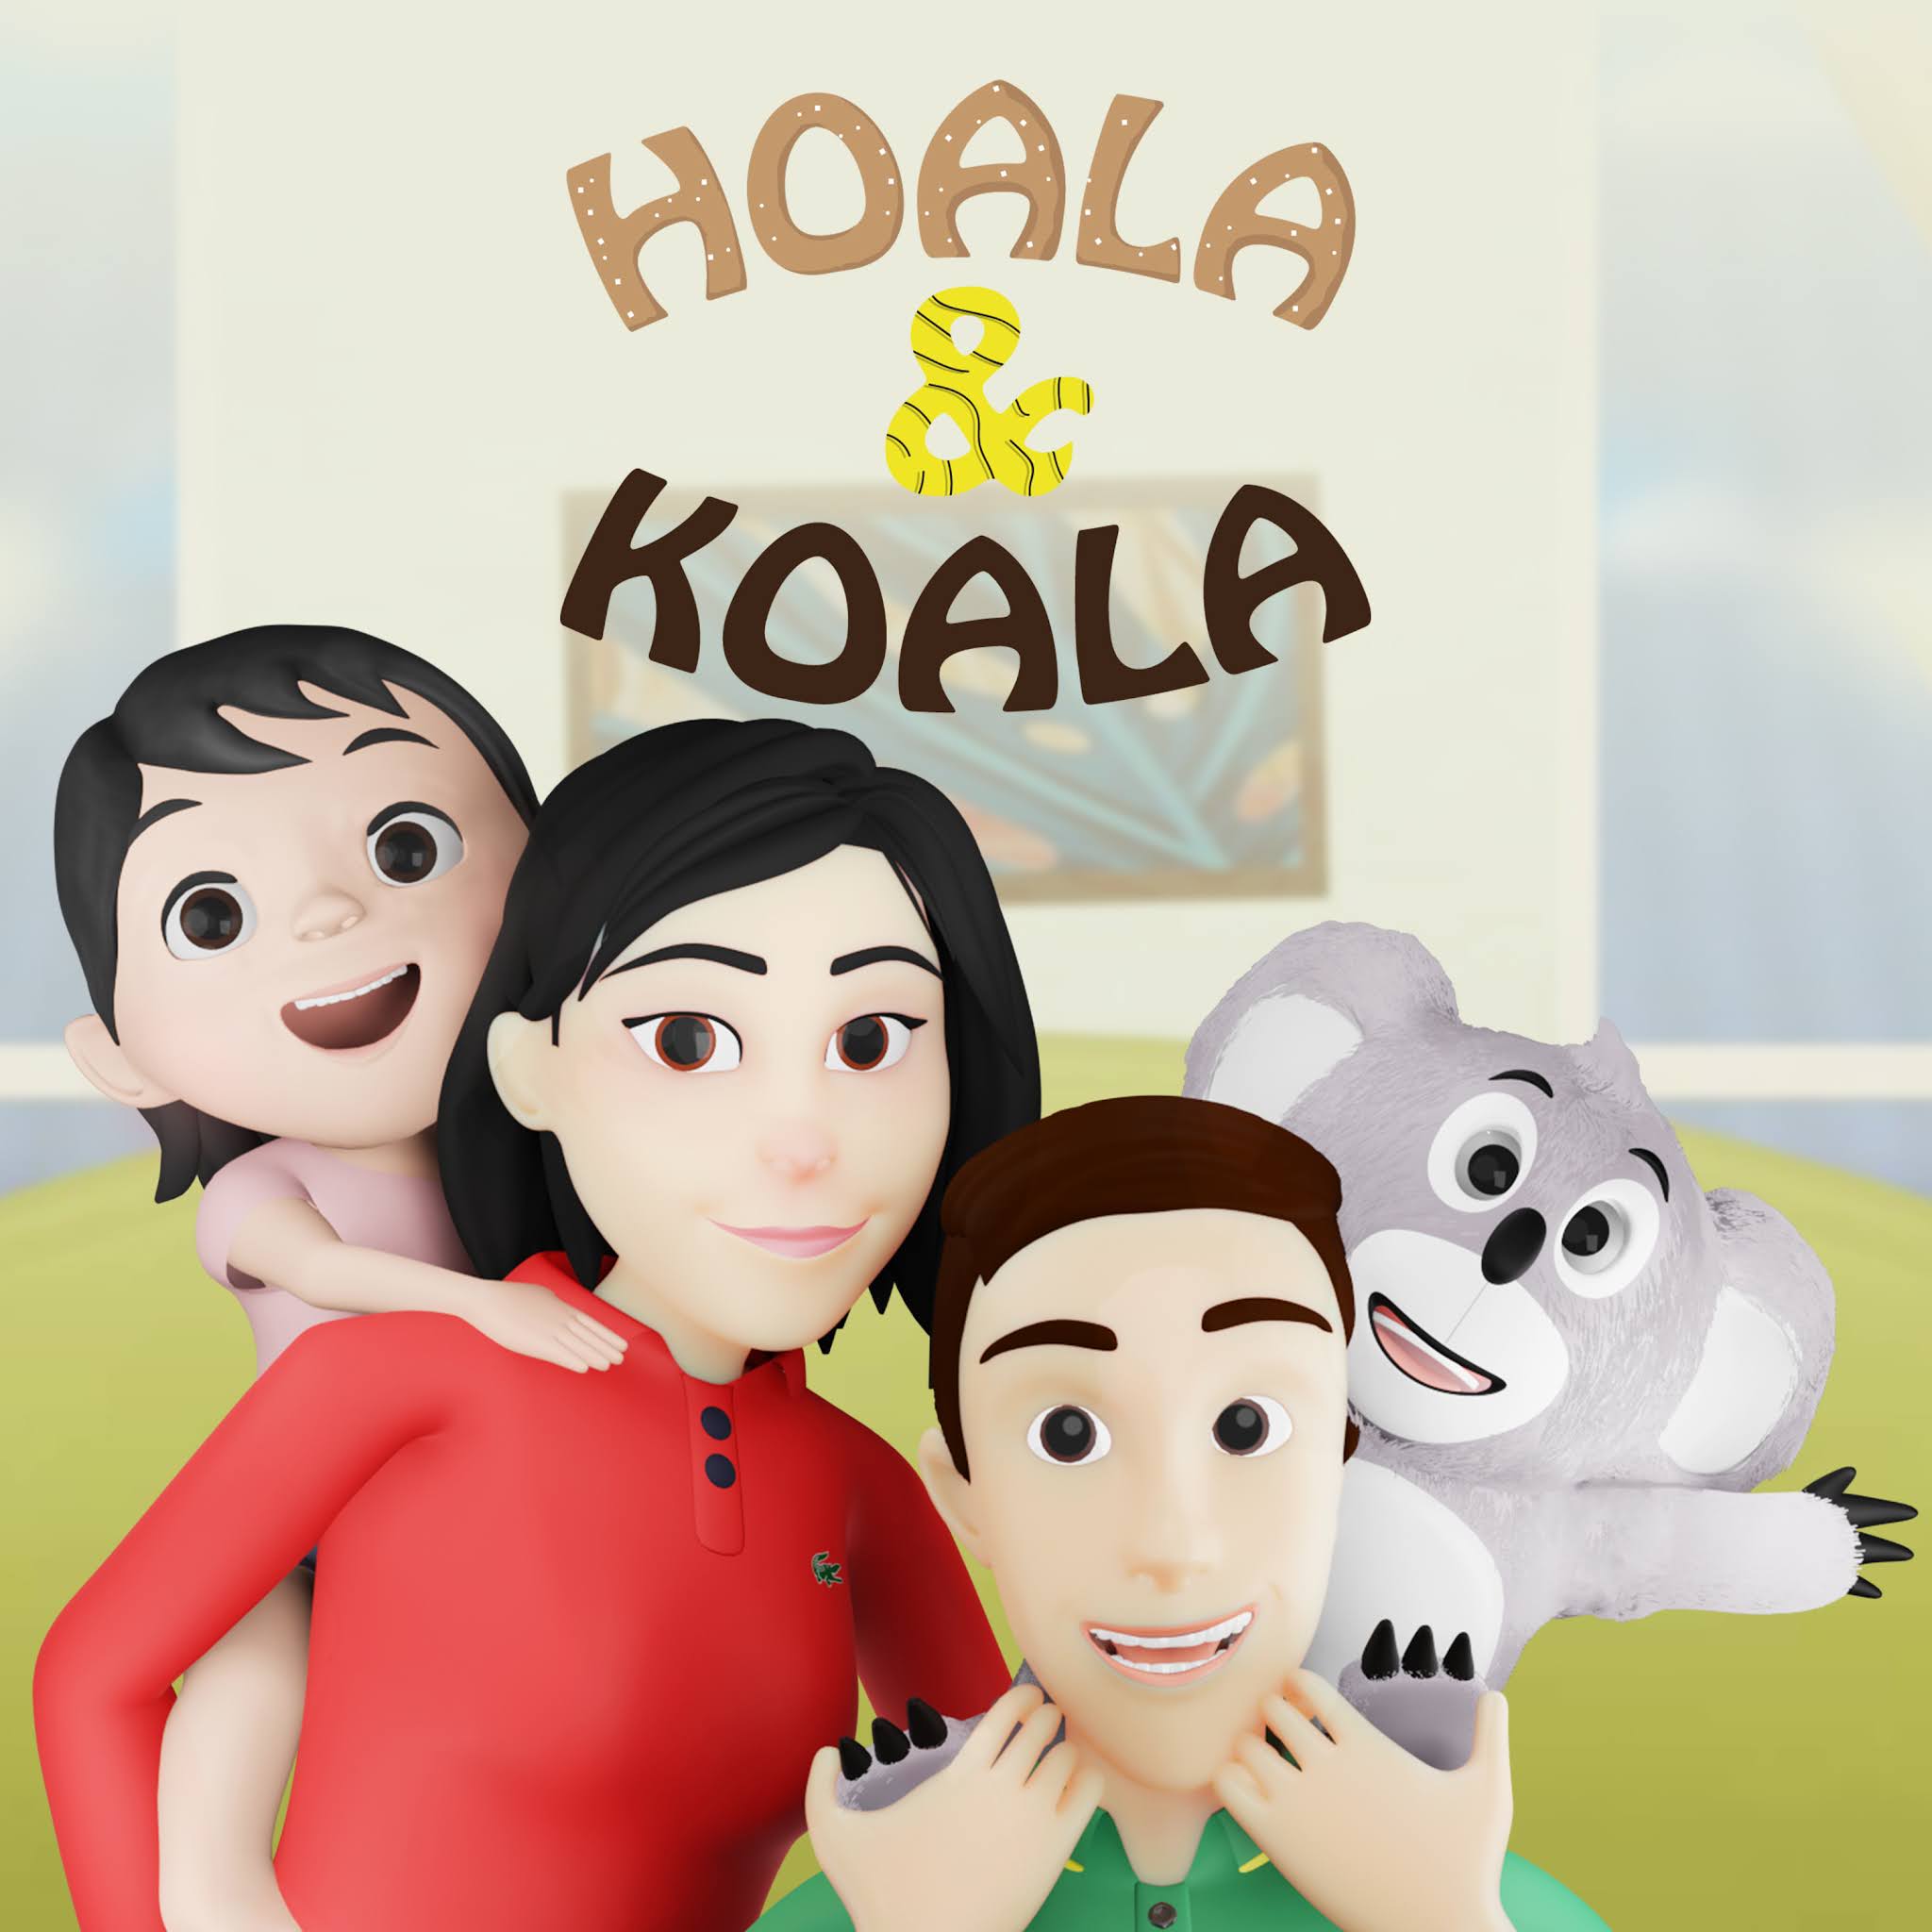 Bingung Mencari Lagu Anak Indonesia? Di Youtube Hoala & Koala Saja